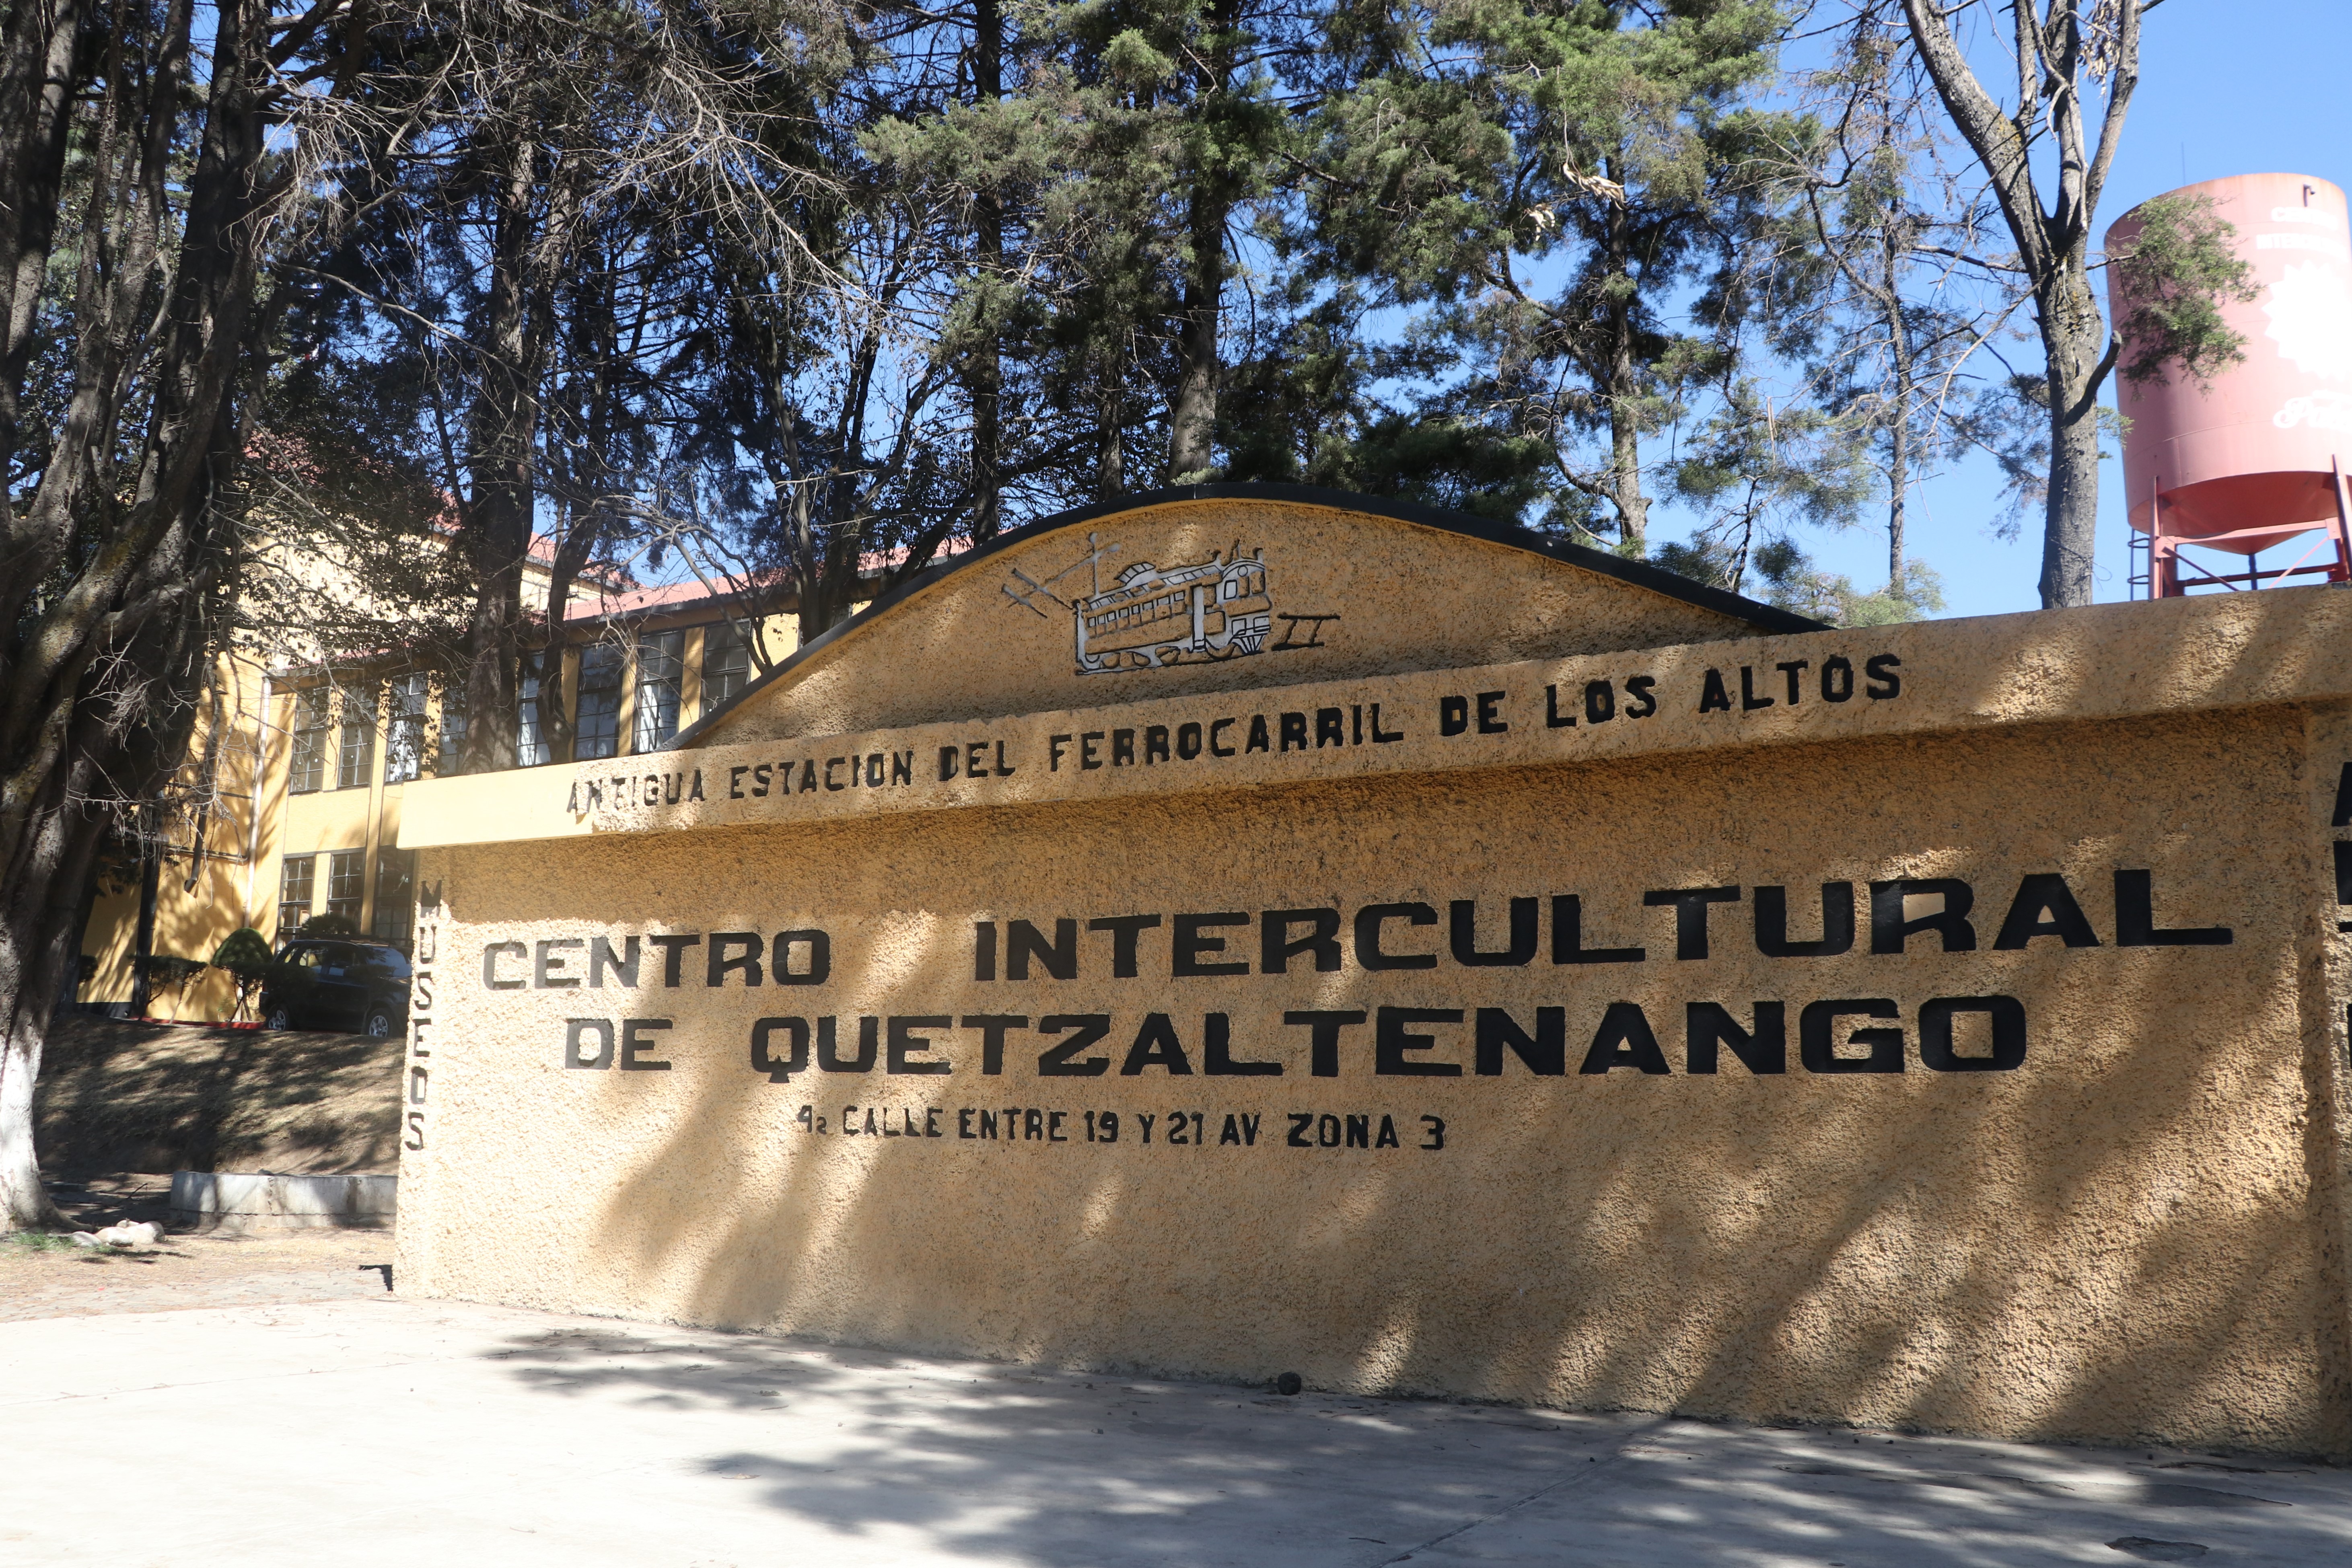 El Centro Intercultural de Quetzaltenango se creó en el 2008 para promover la cultura. (Foto Prensa Libre: Raúl Juárez)